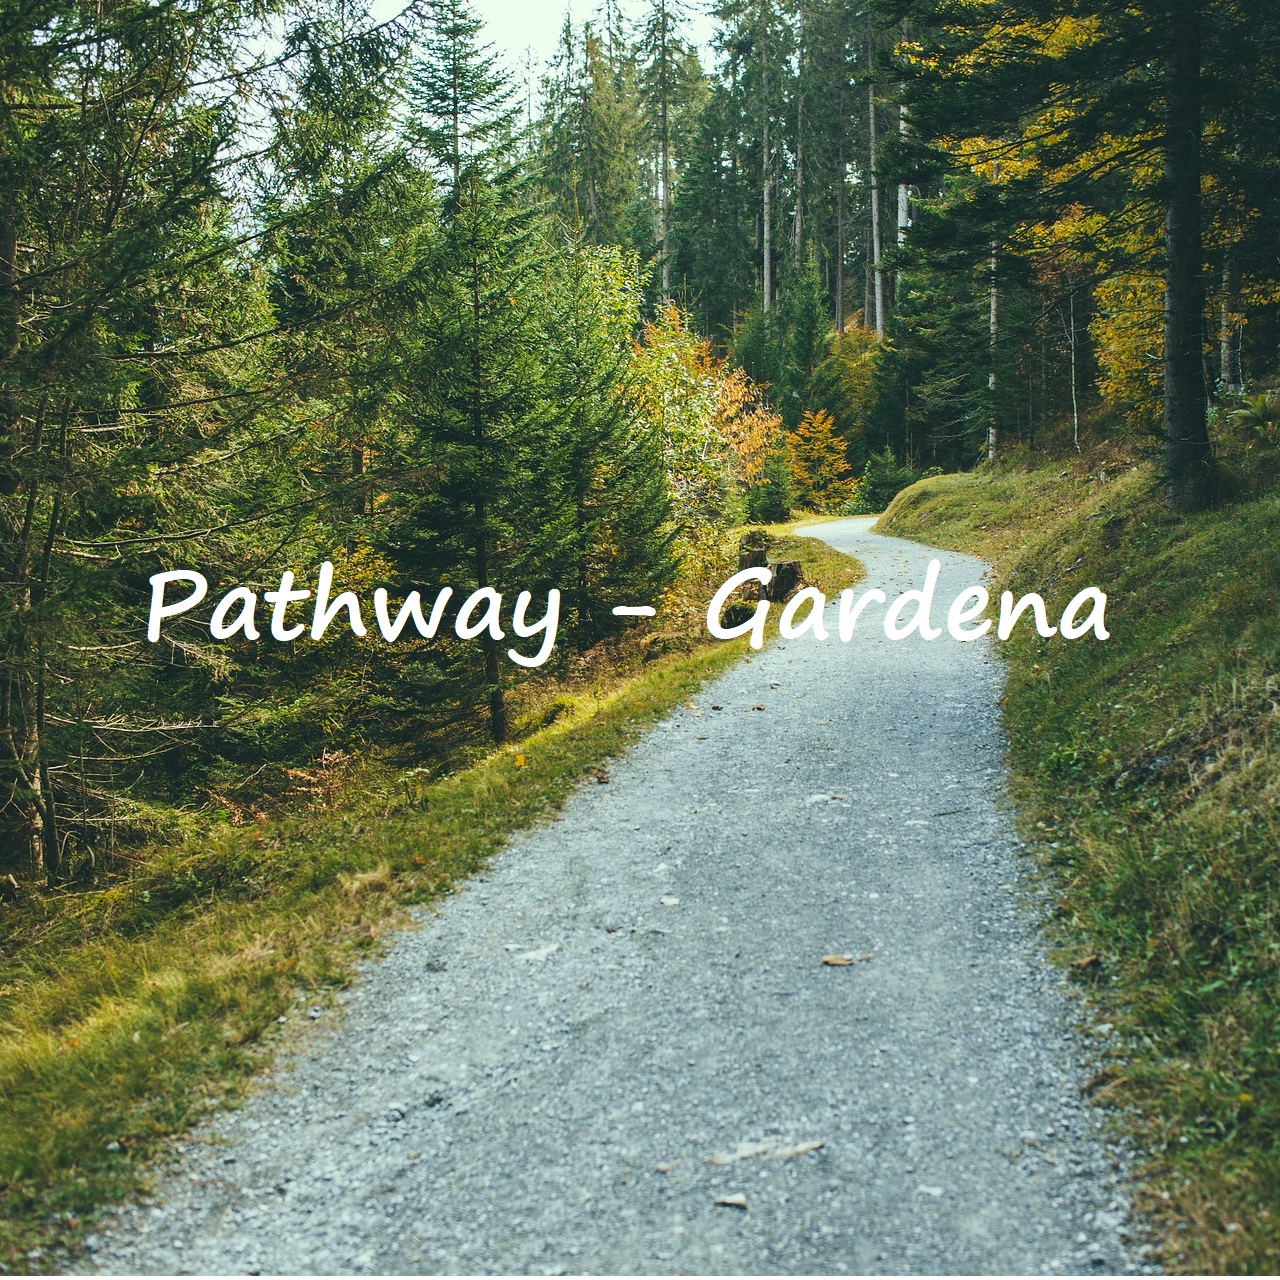 Pathway - Gardena